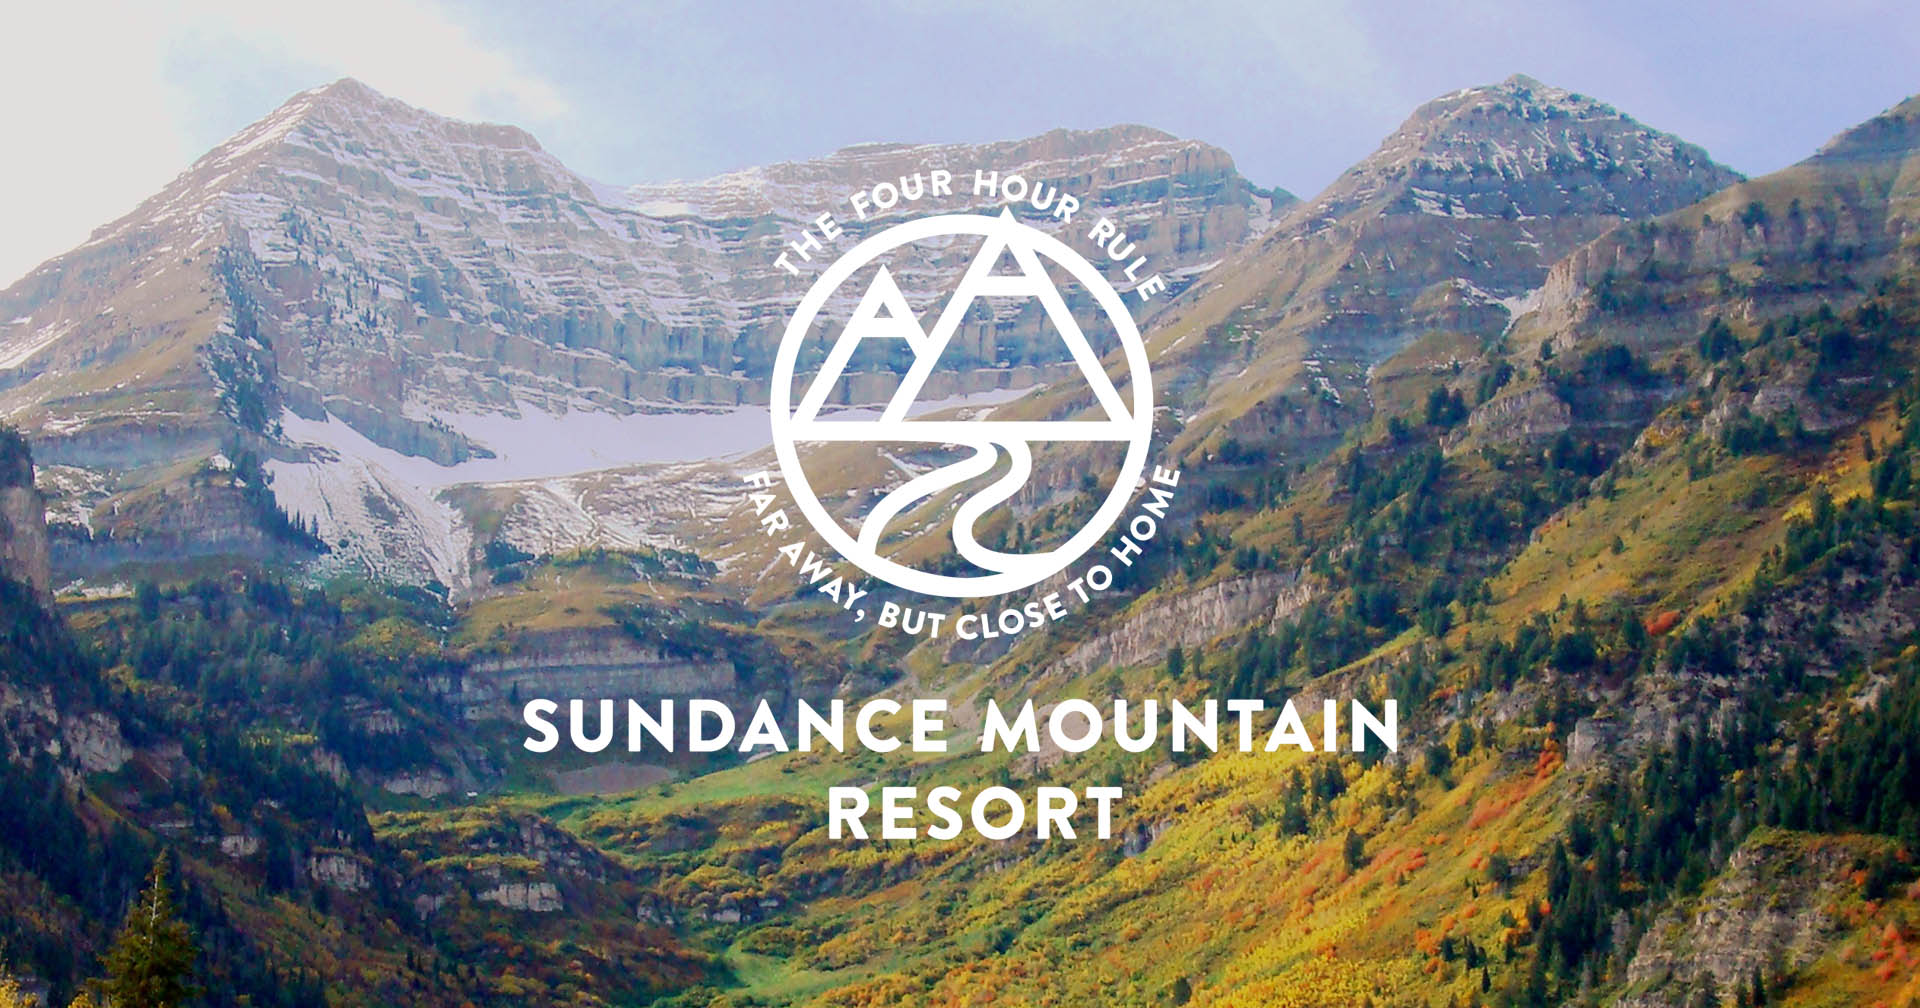 The Perfect Weekend at Robert Redford's Sundance Mountain Resorrt